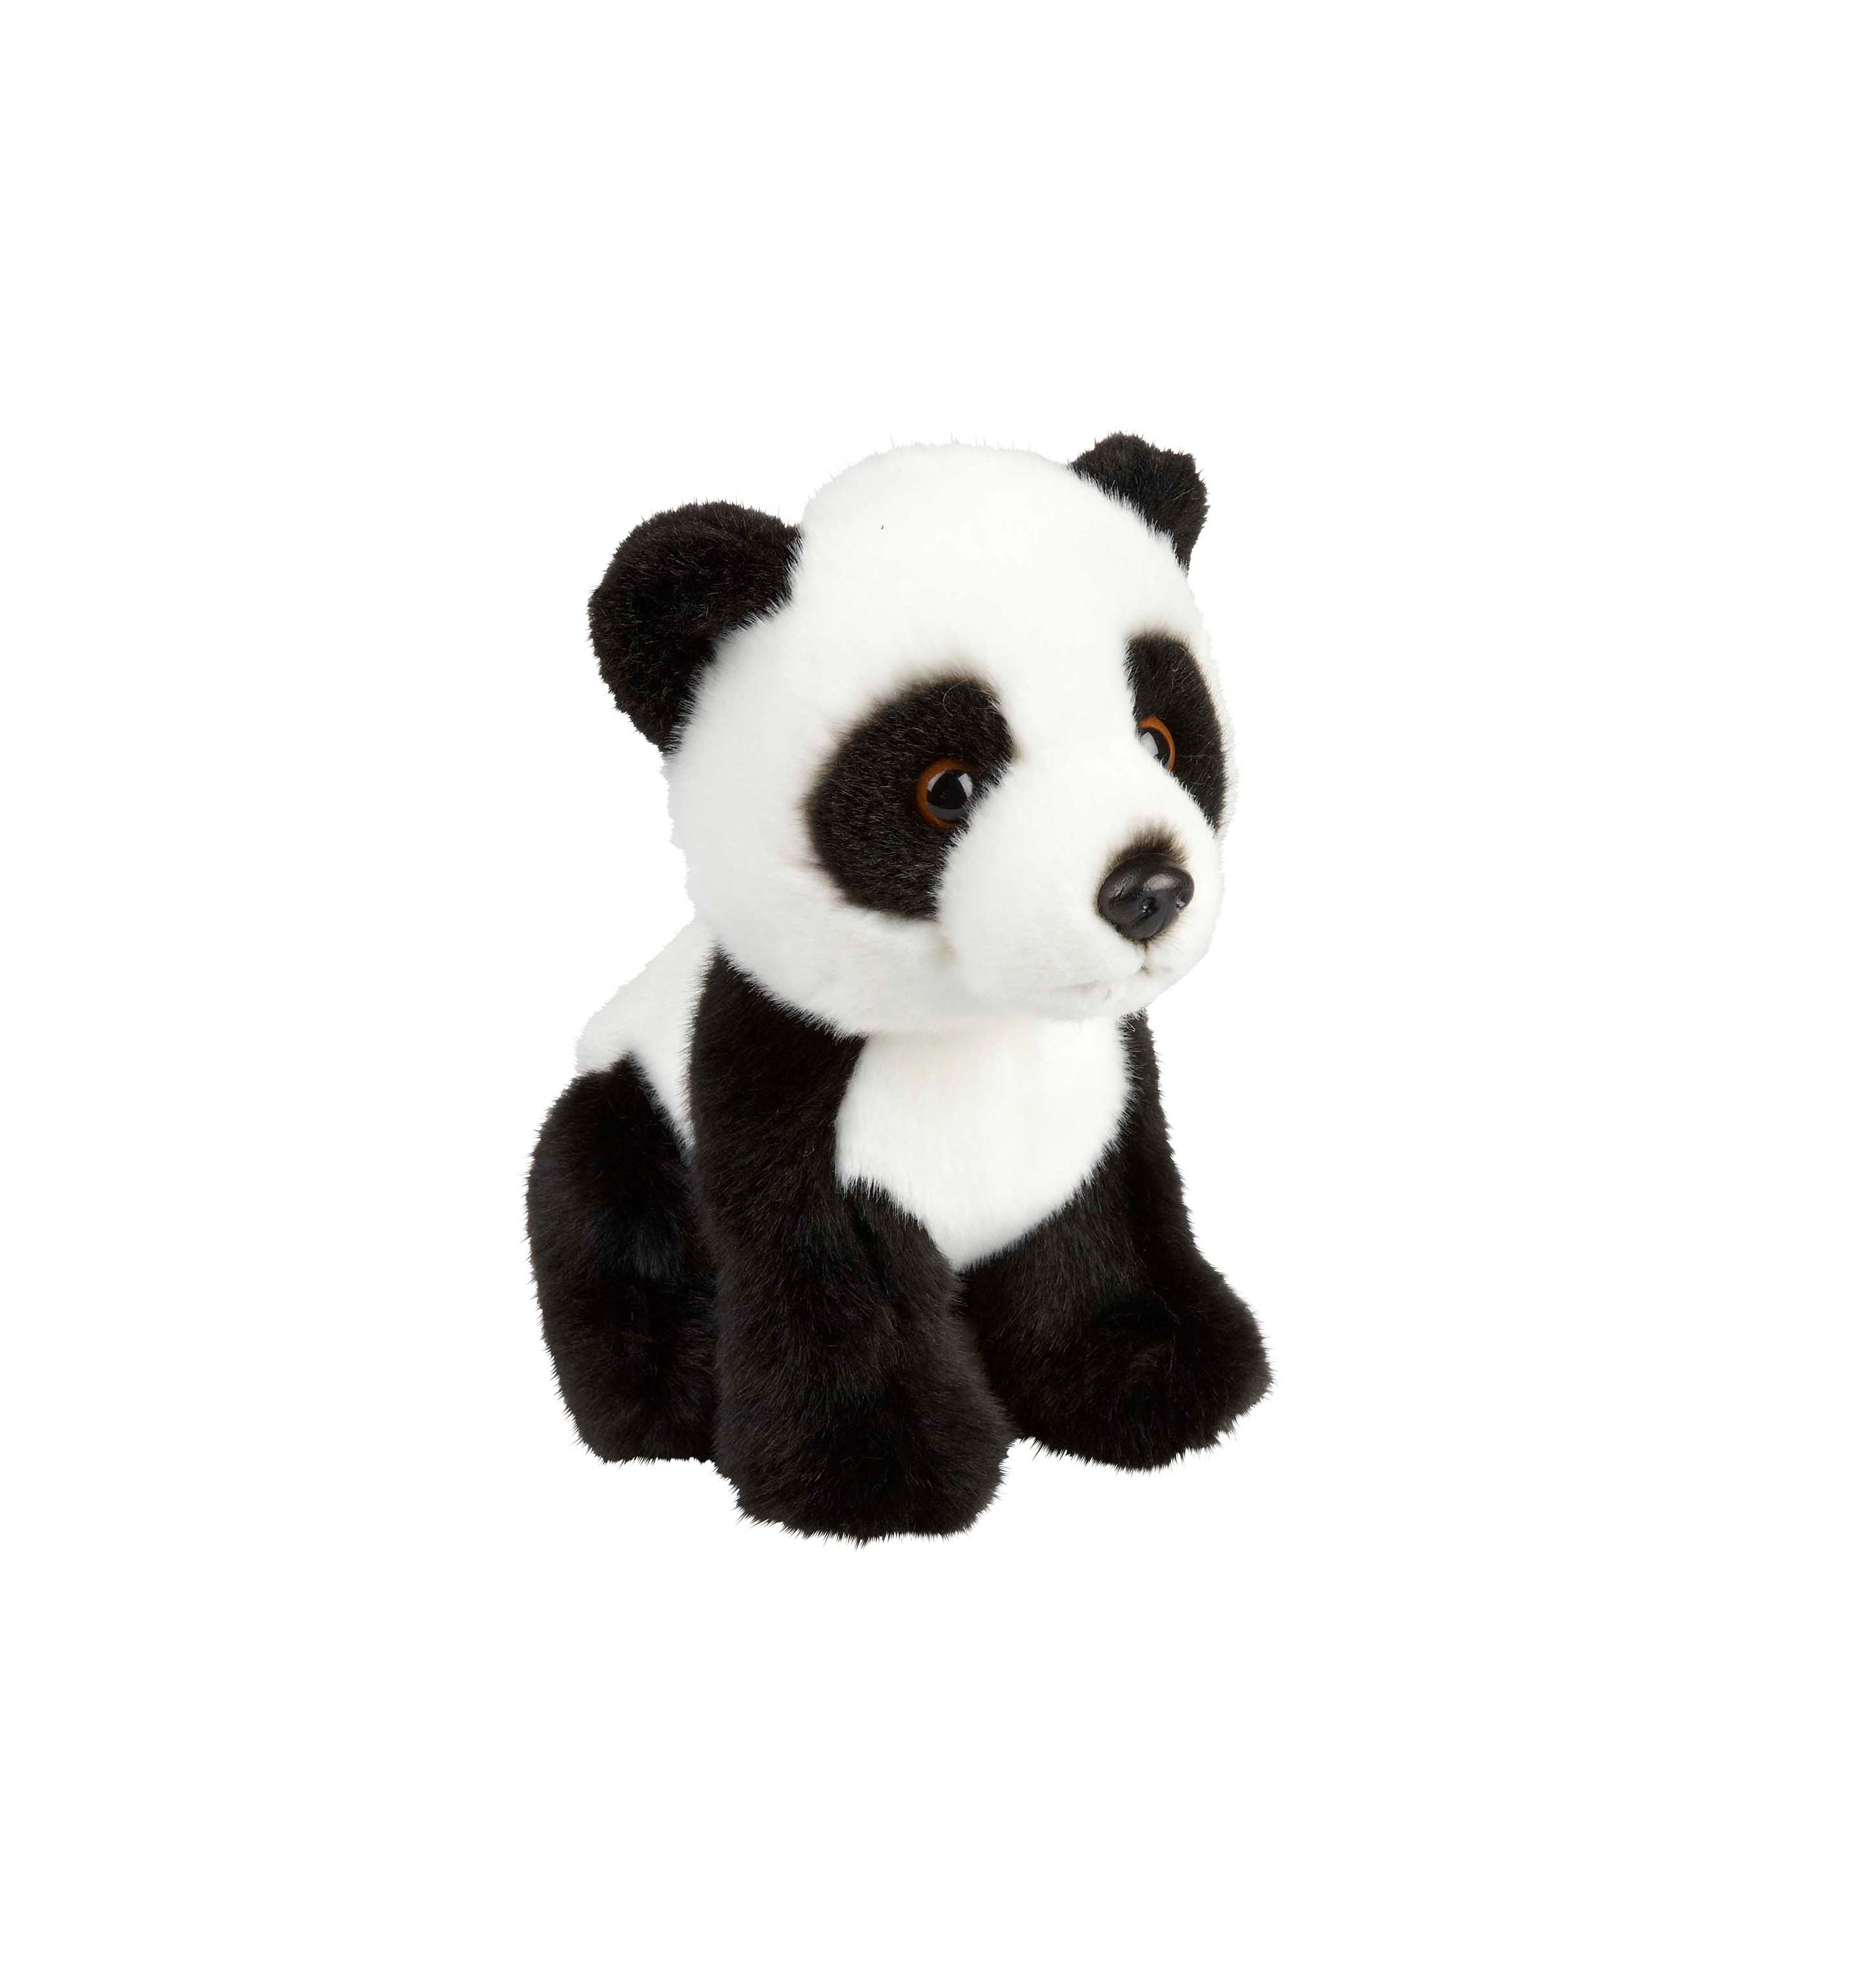 Baby Panda Soft Toy, 18cm